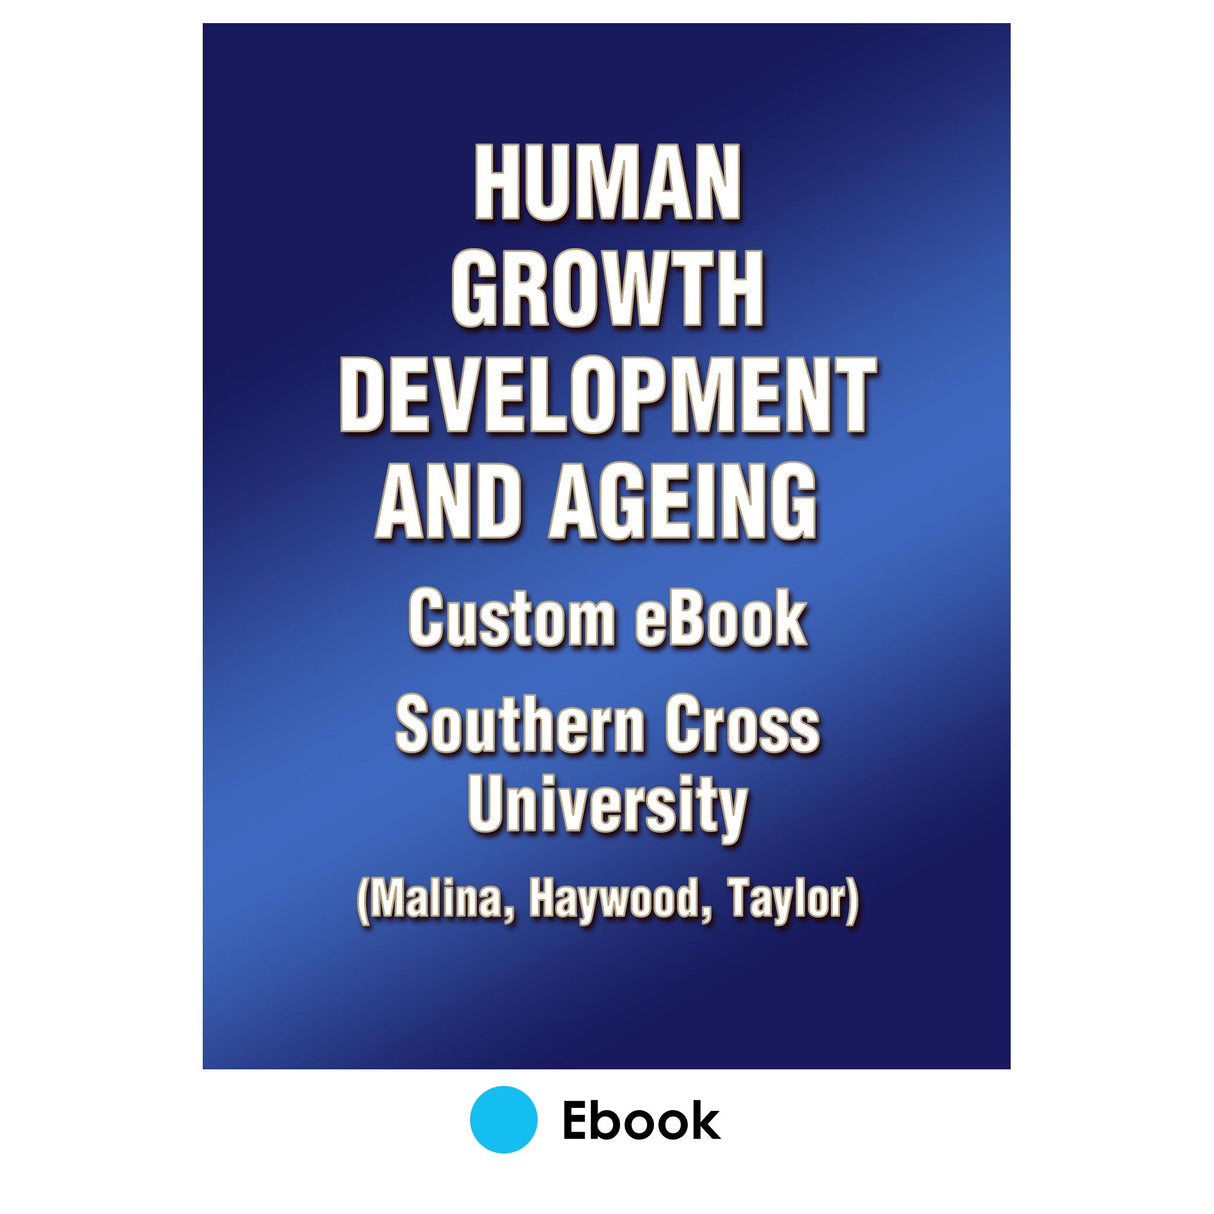 Human Growth Development and Ageing Custom Ebook: Southern Cross University (Malina, Haywood, Taylor)